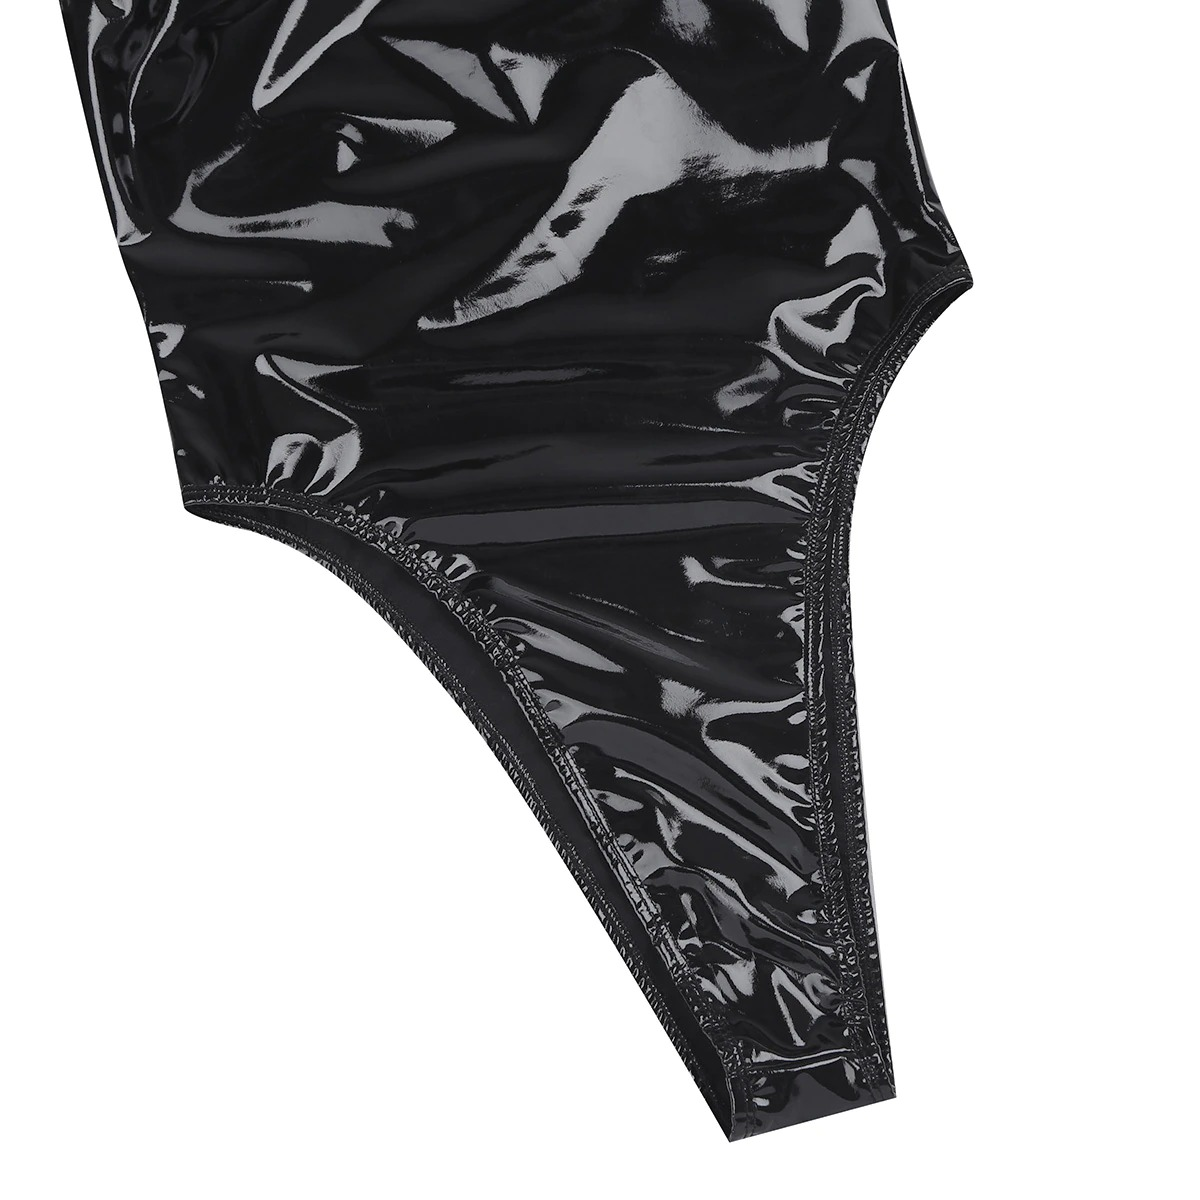 Ladies Wet Look Bodysuit in Black Colour / Patent Leather Lingerie with High Cut - EVE's SECRETS